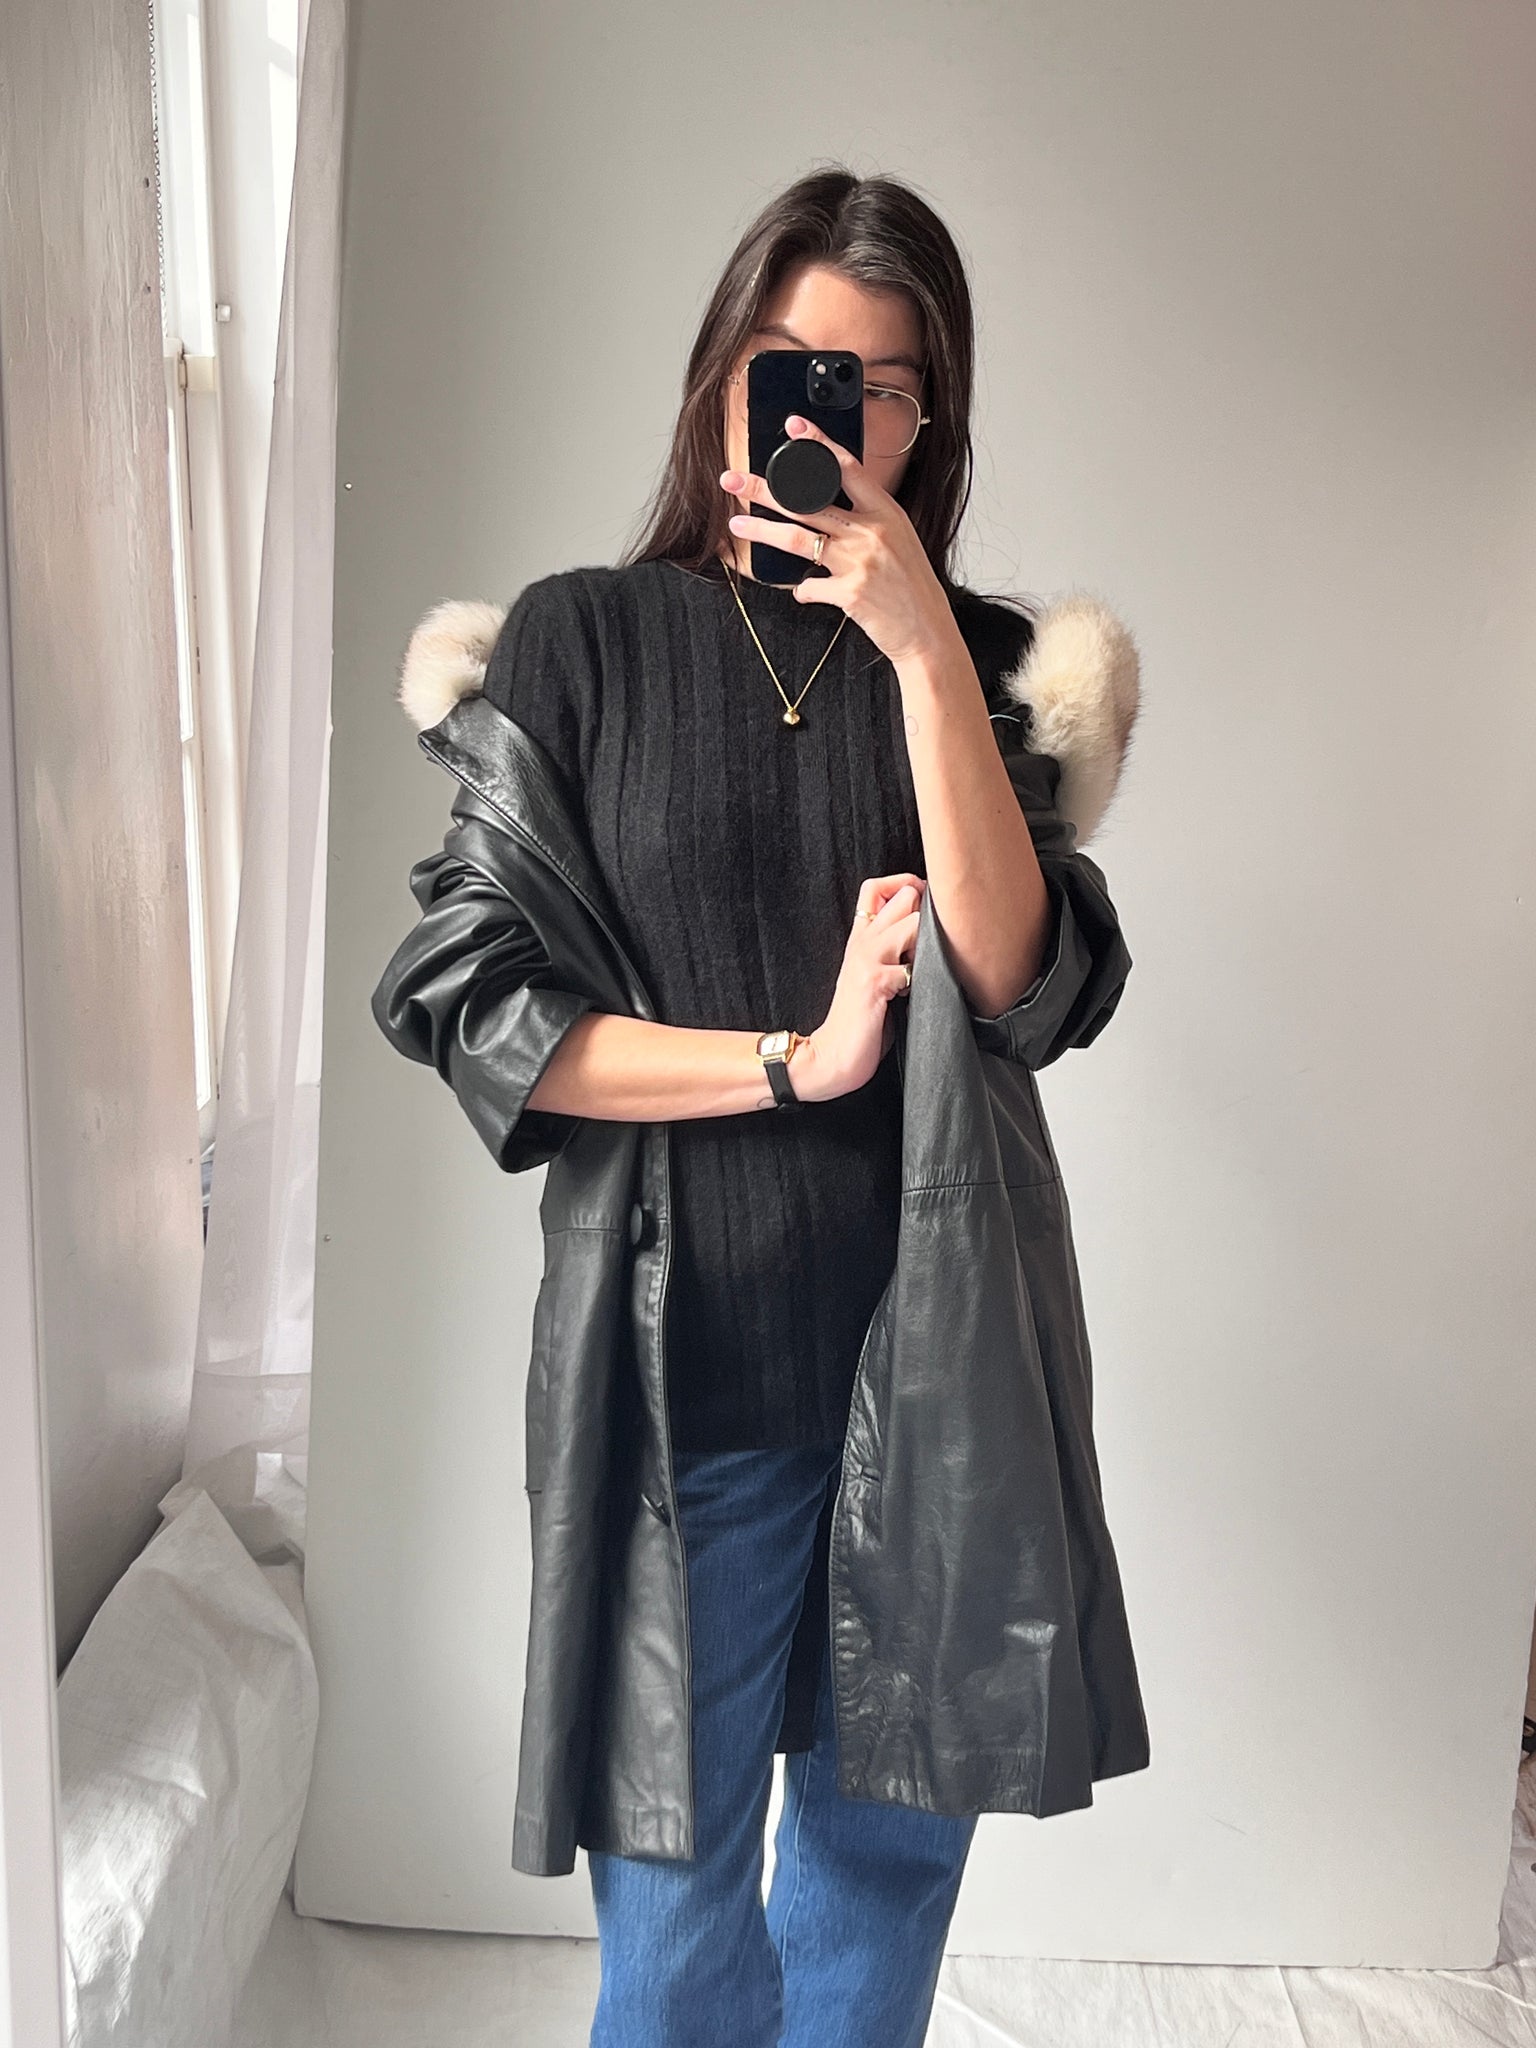 D’esprit leather and fur coat